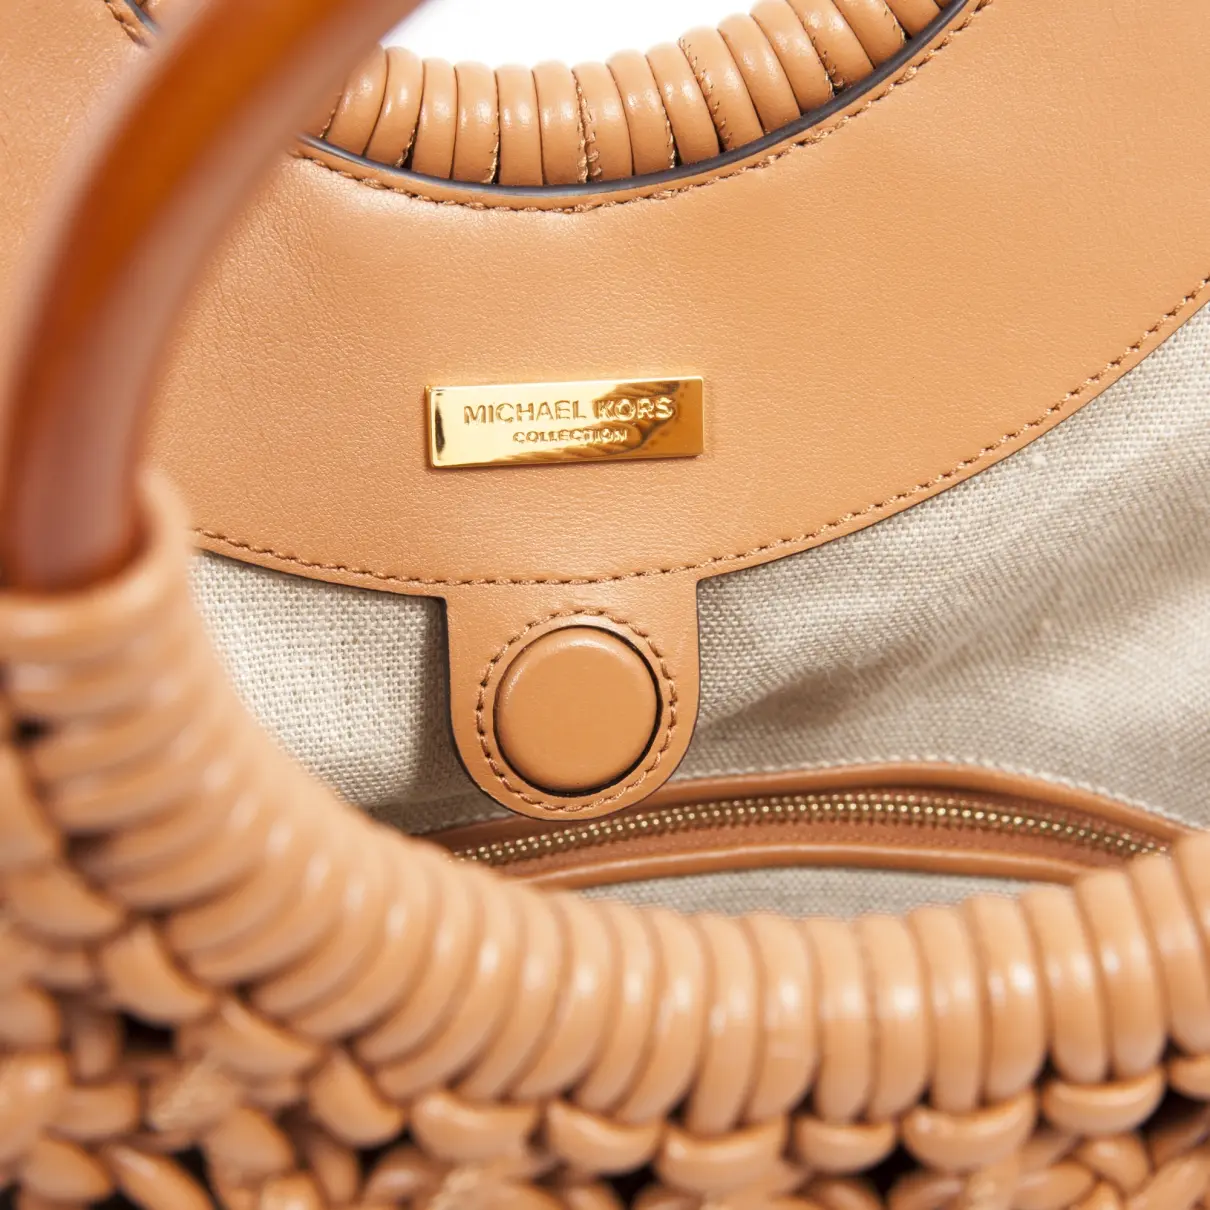 Luxury MICHAEL KORS COLLECTION Handbags Women